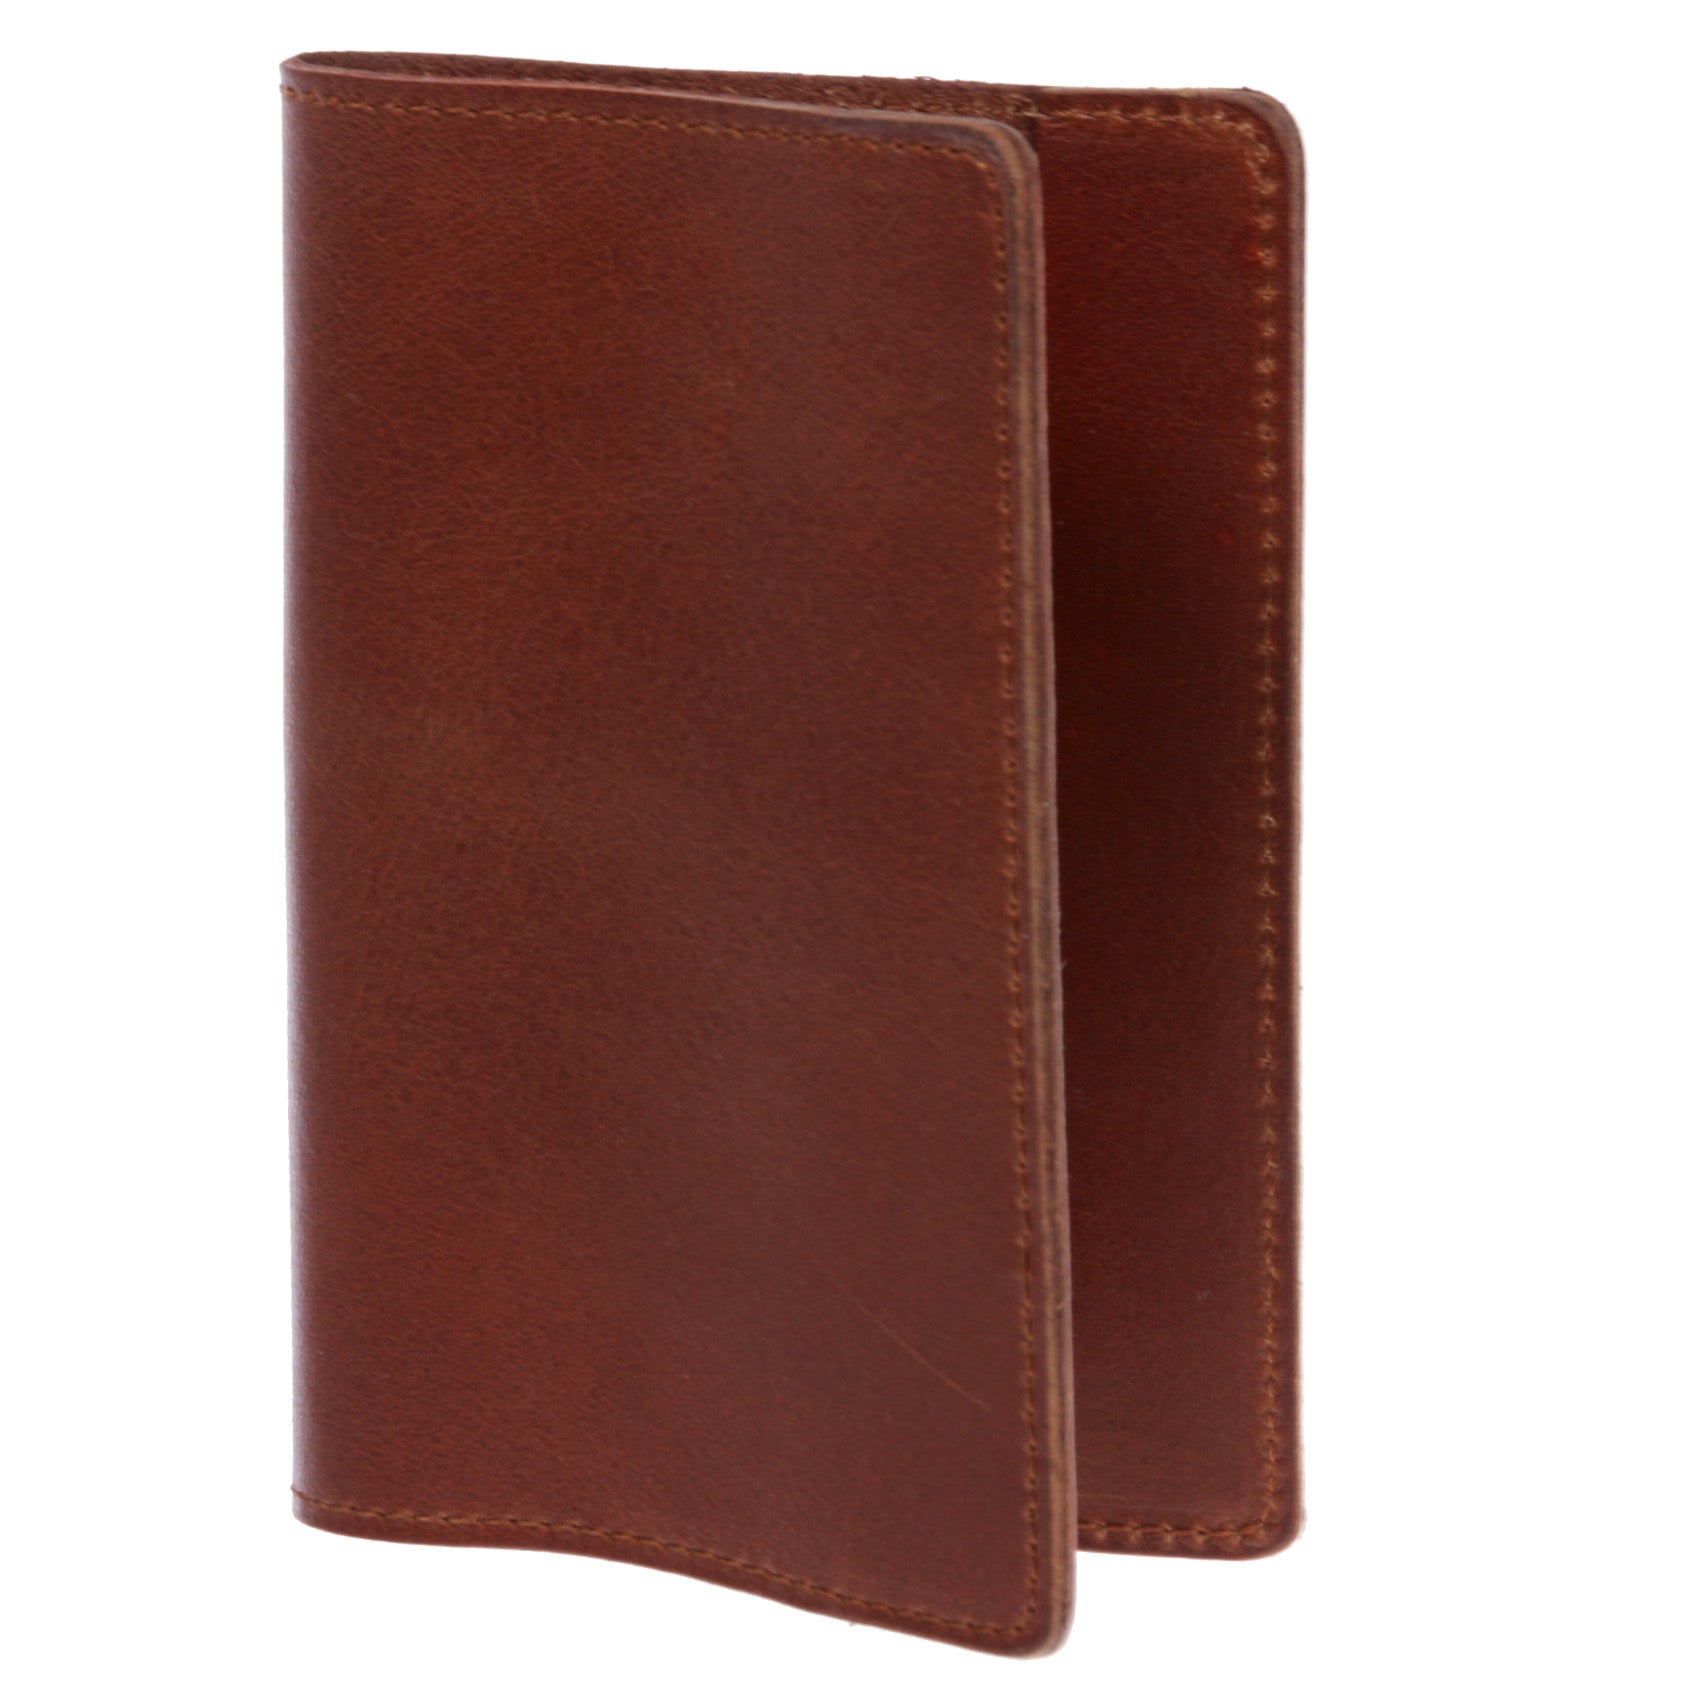 100% Soft Leather Passport Cover - Plain Leather Holder Slim Sleeve Case